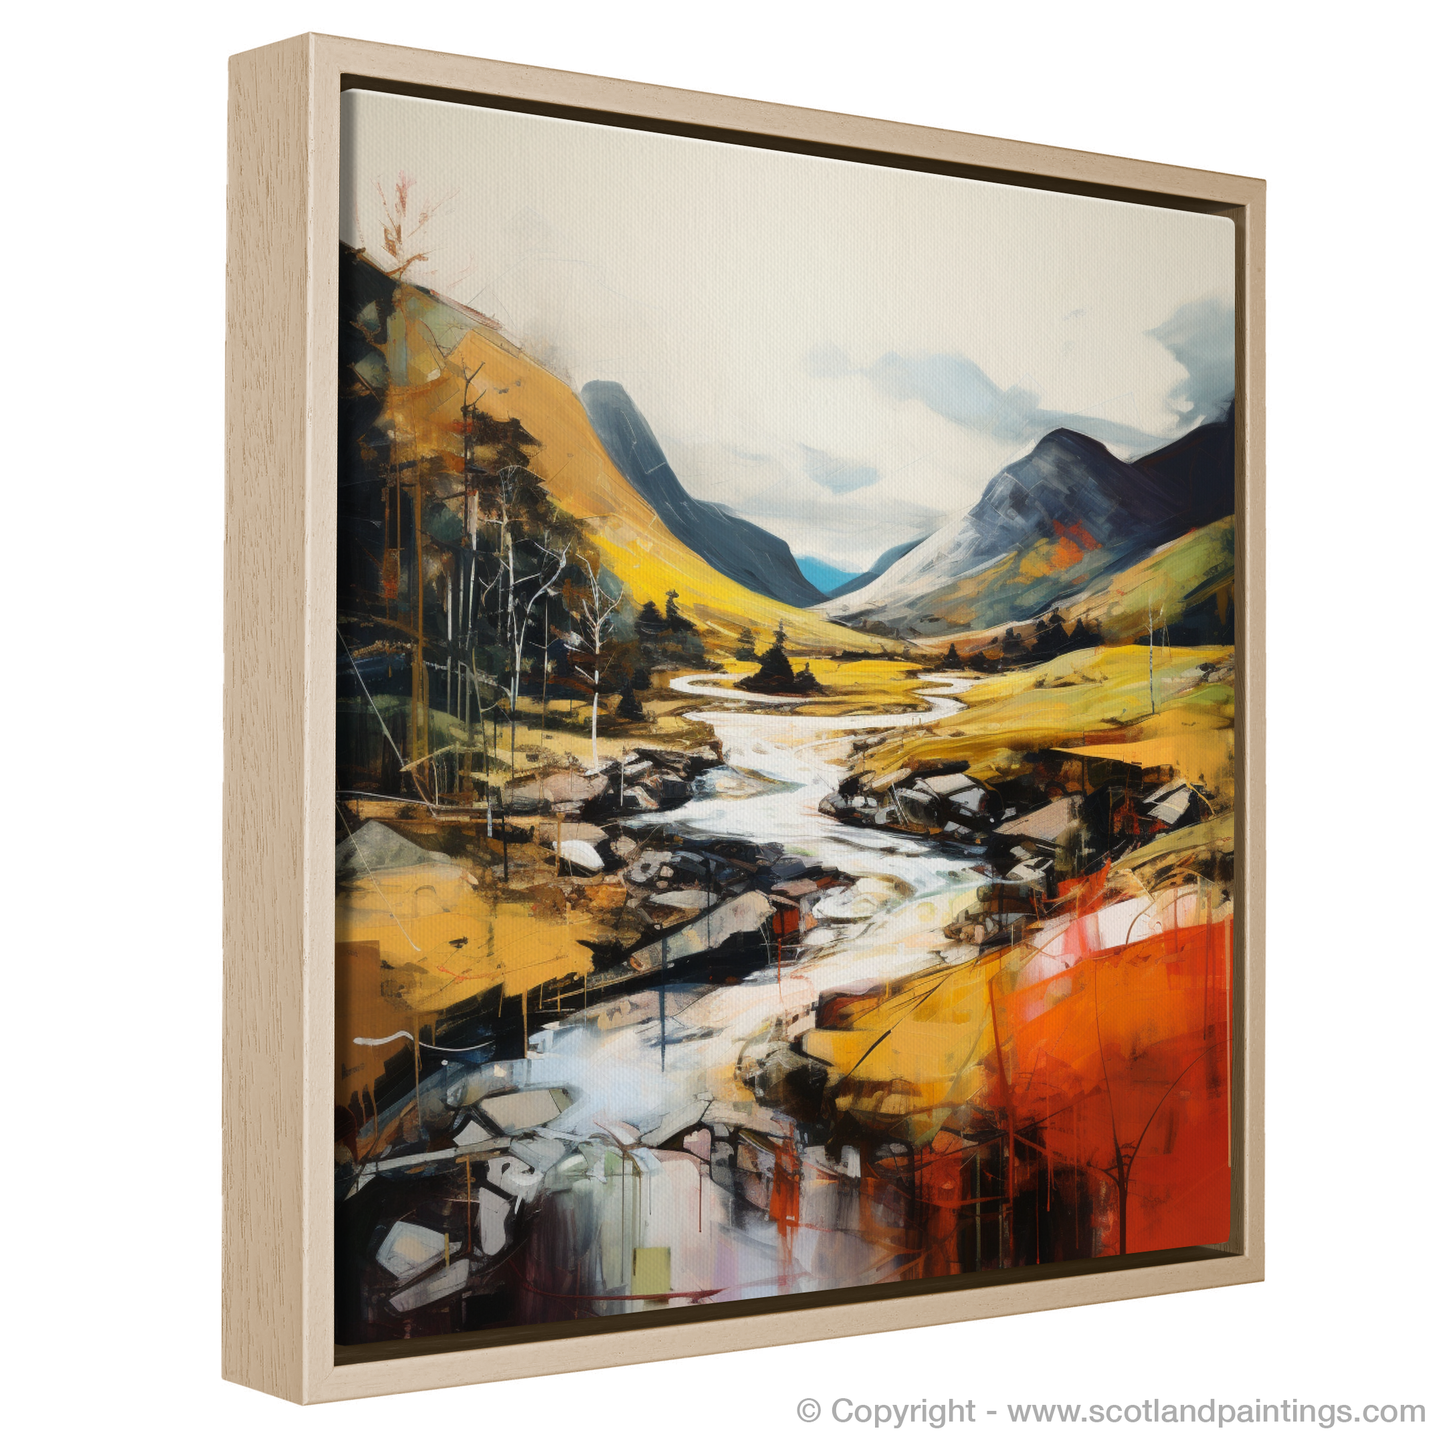 Highland Hues: A Pop Art Vision of Glen Feshie